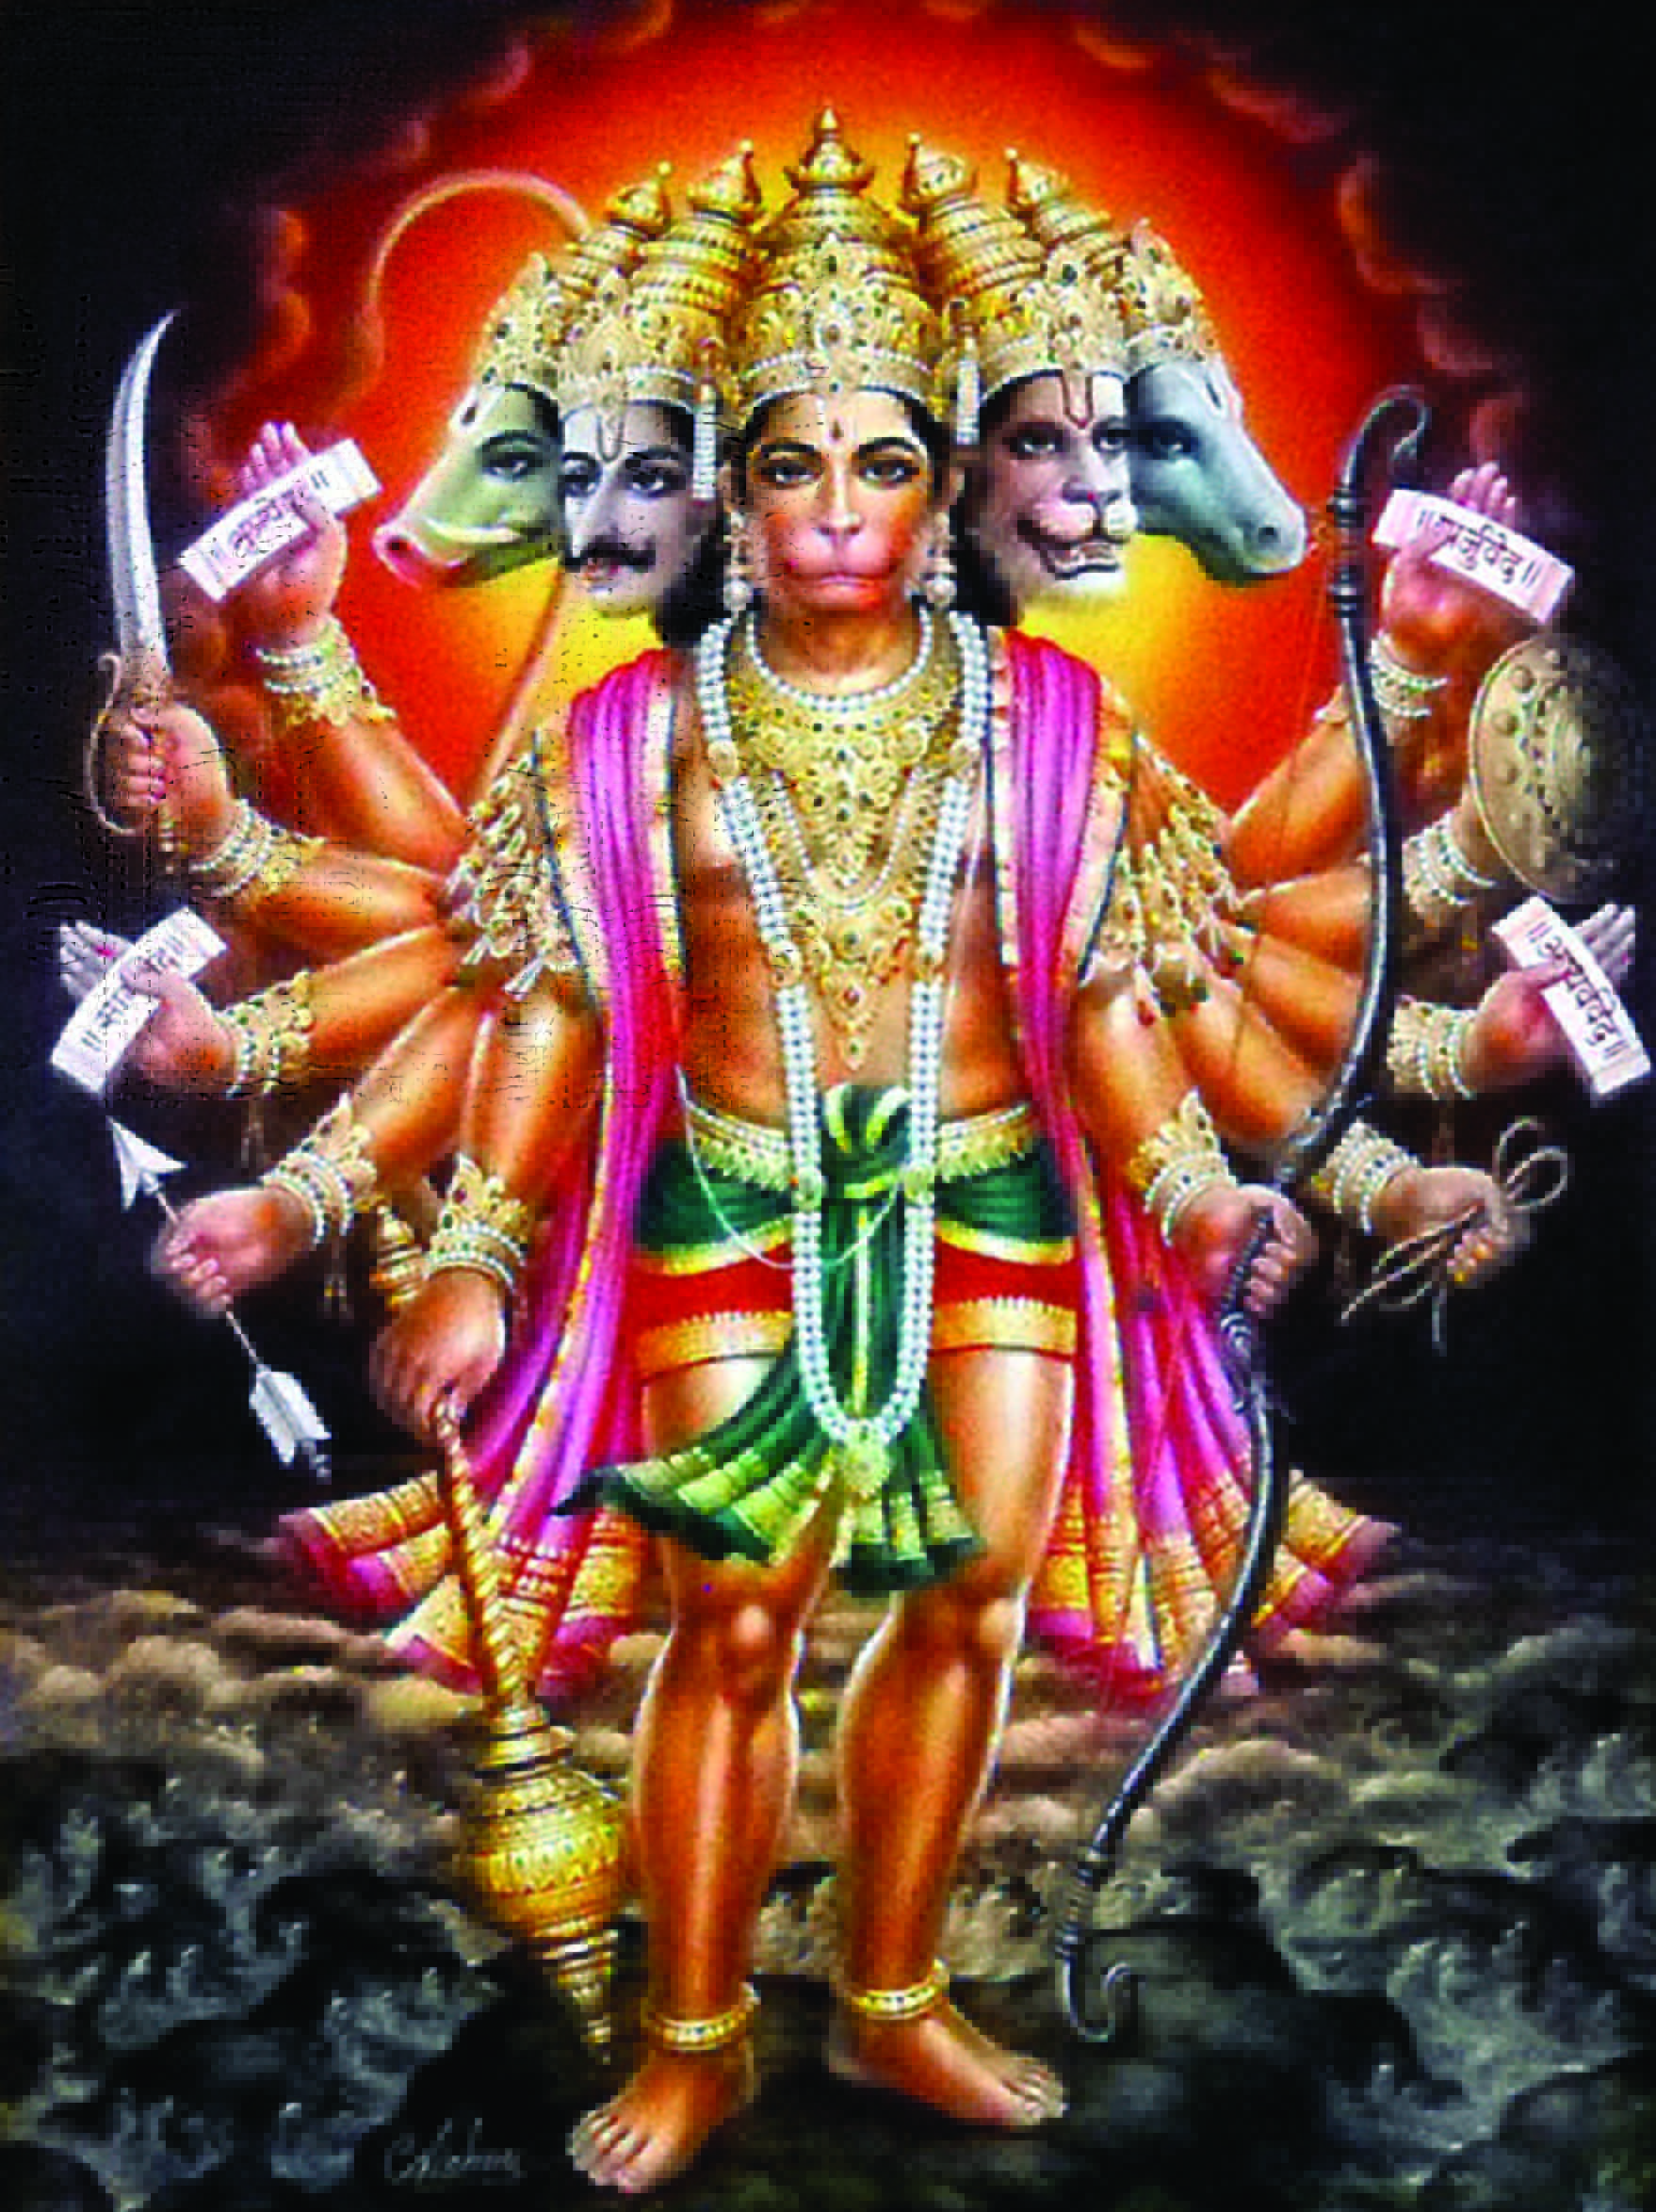 Hanuman english to hindi pdf free